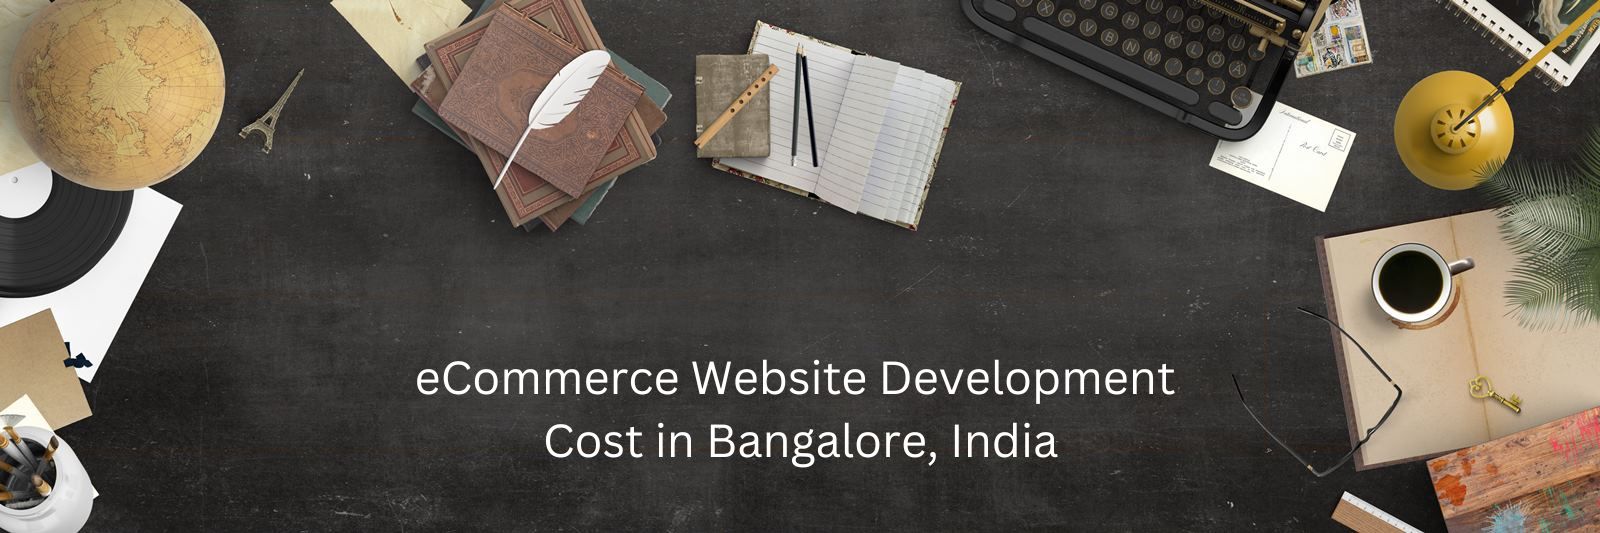 ecommerce website development cost in bangalore india